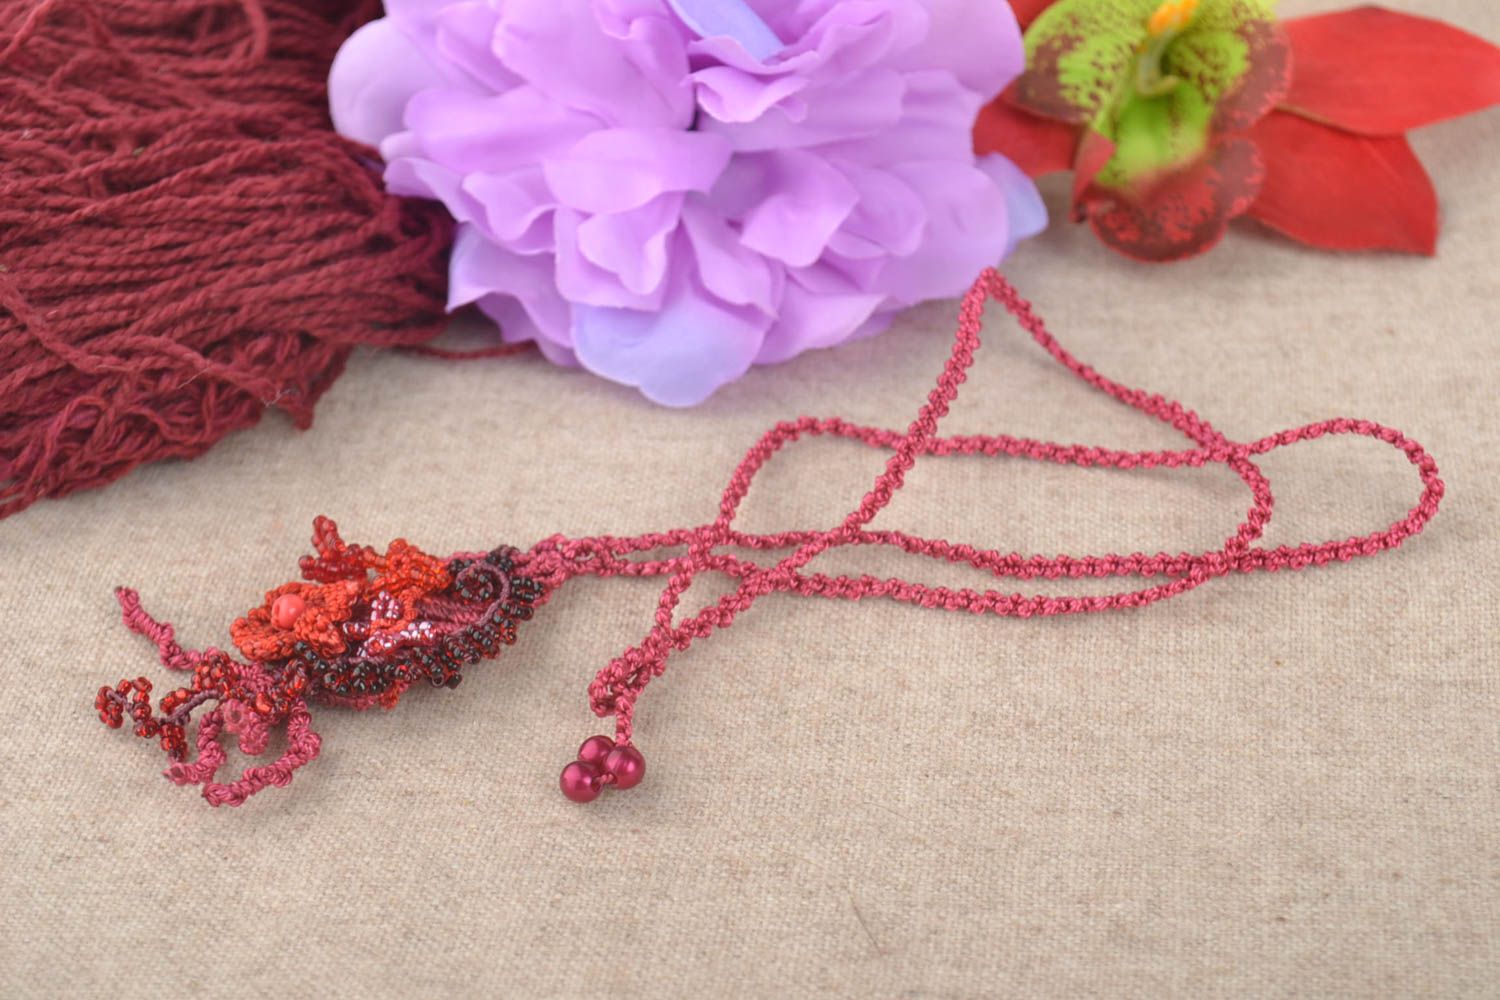 Handmade macrame woven necklace designer accessories present idea for girls photo 1